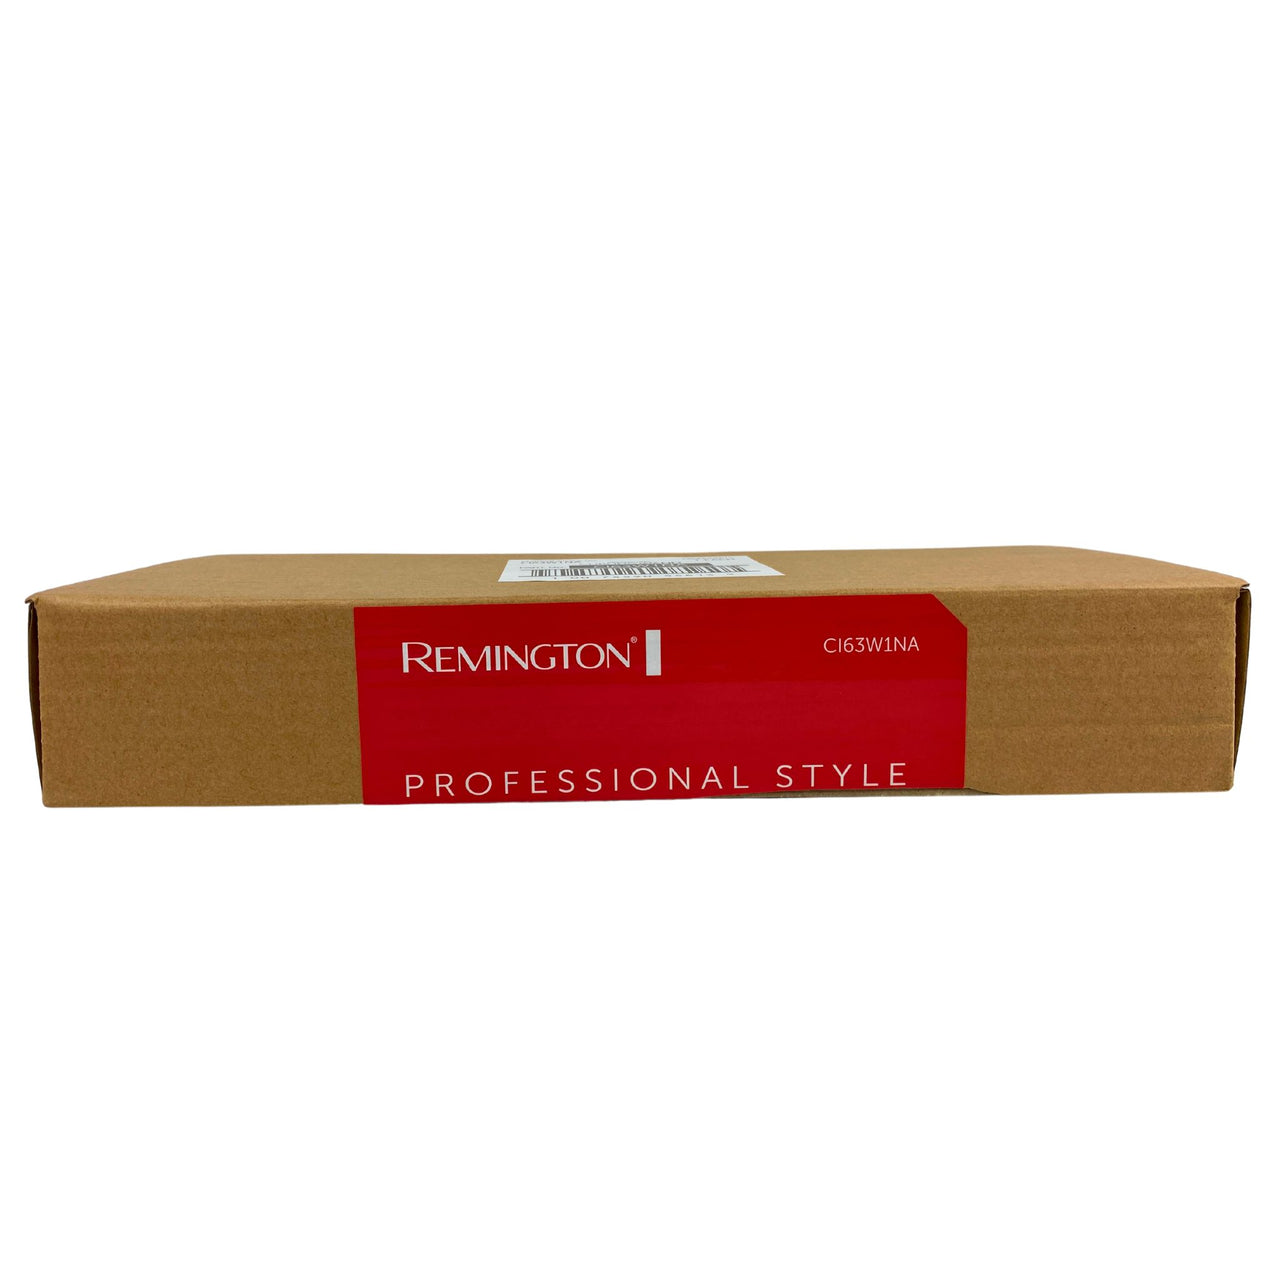 Remington Professional Style 1/2" - 1" Slim Wand for Long Lasting Medium Curls